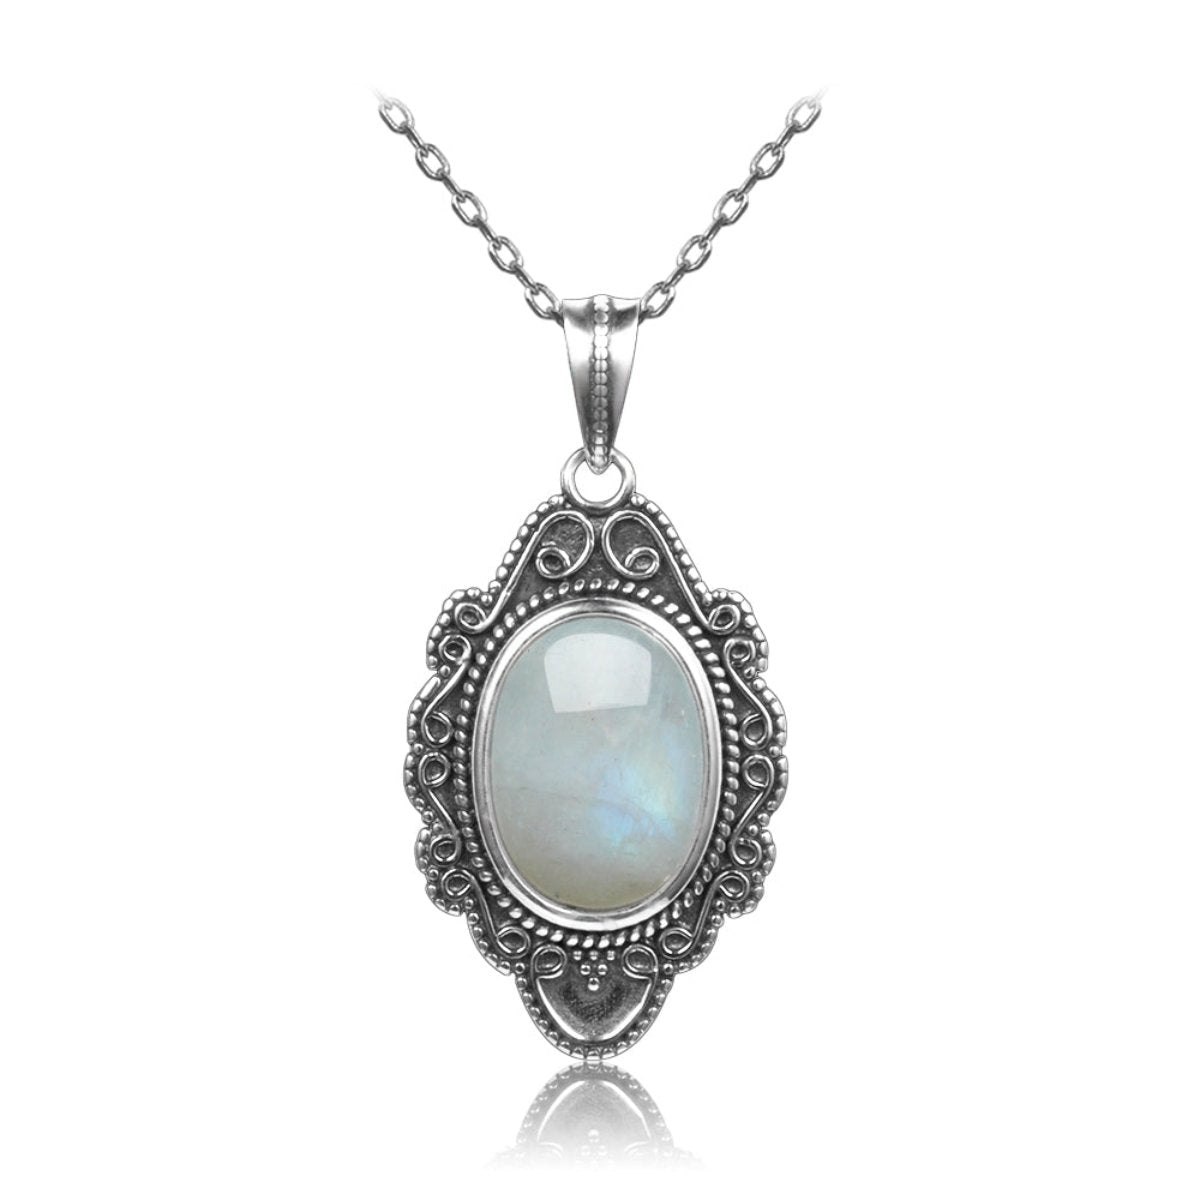 Vintage Natural Moonstone Sterling Silver Necklace - Moonstone - Necklaces - Pretland | Spiritual Crystals & Jewelry